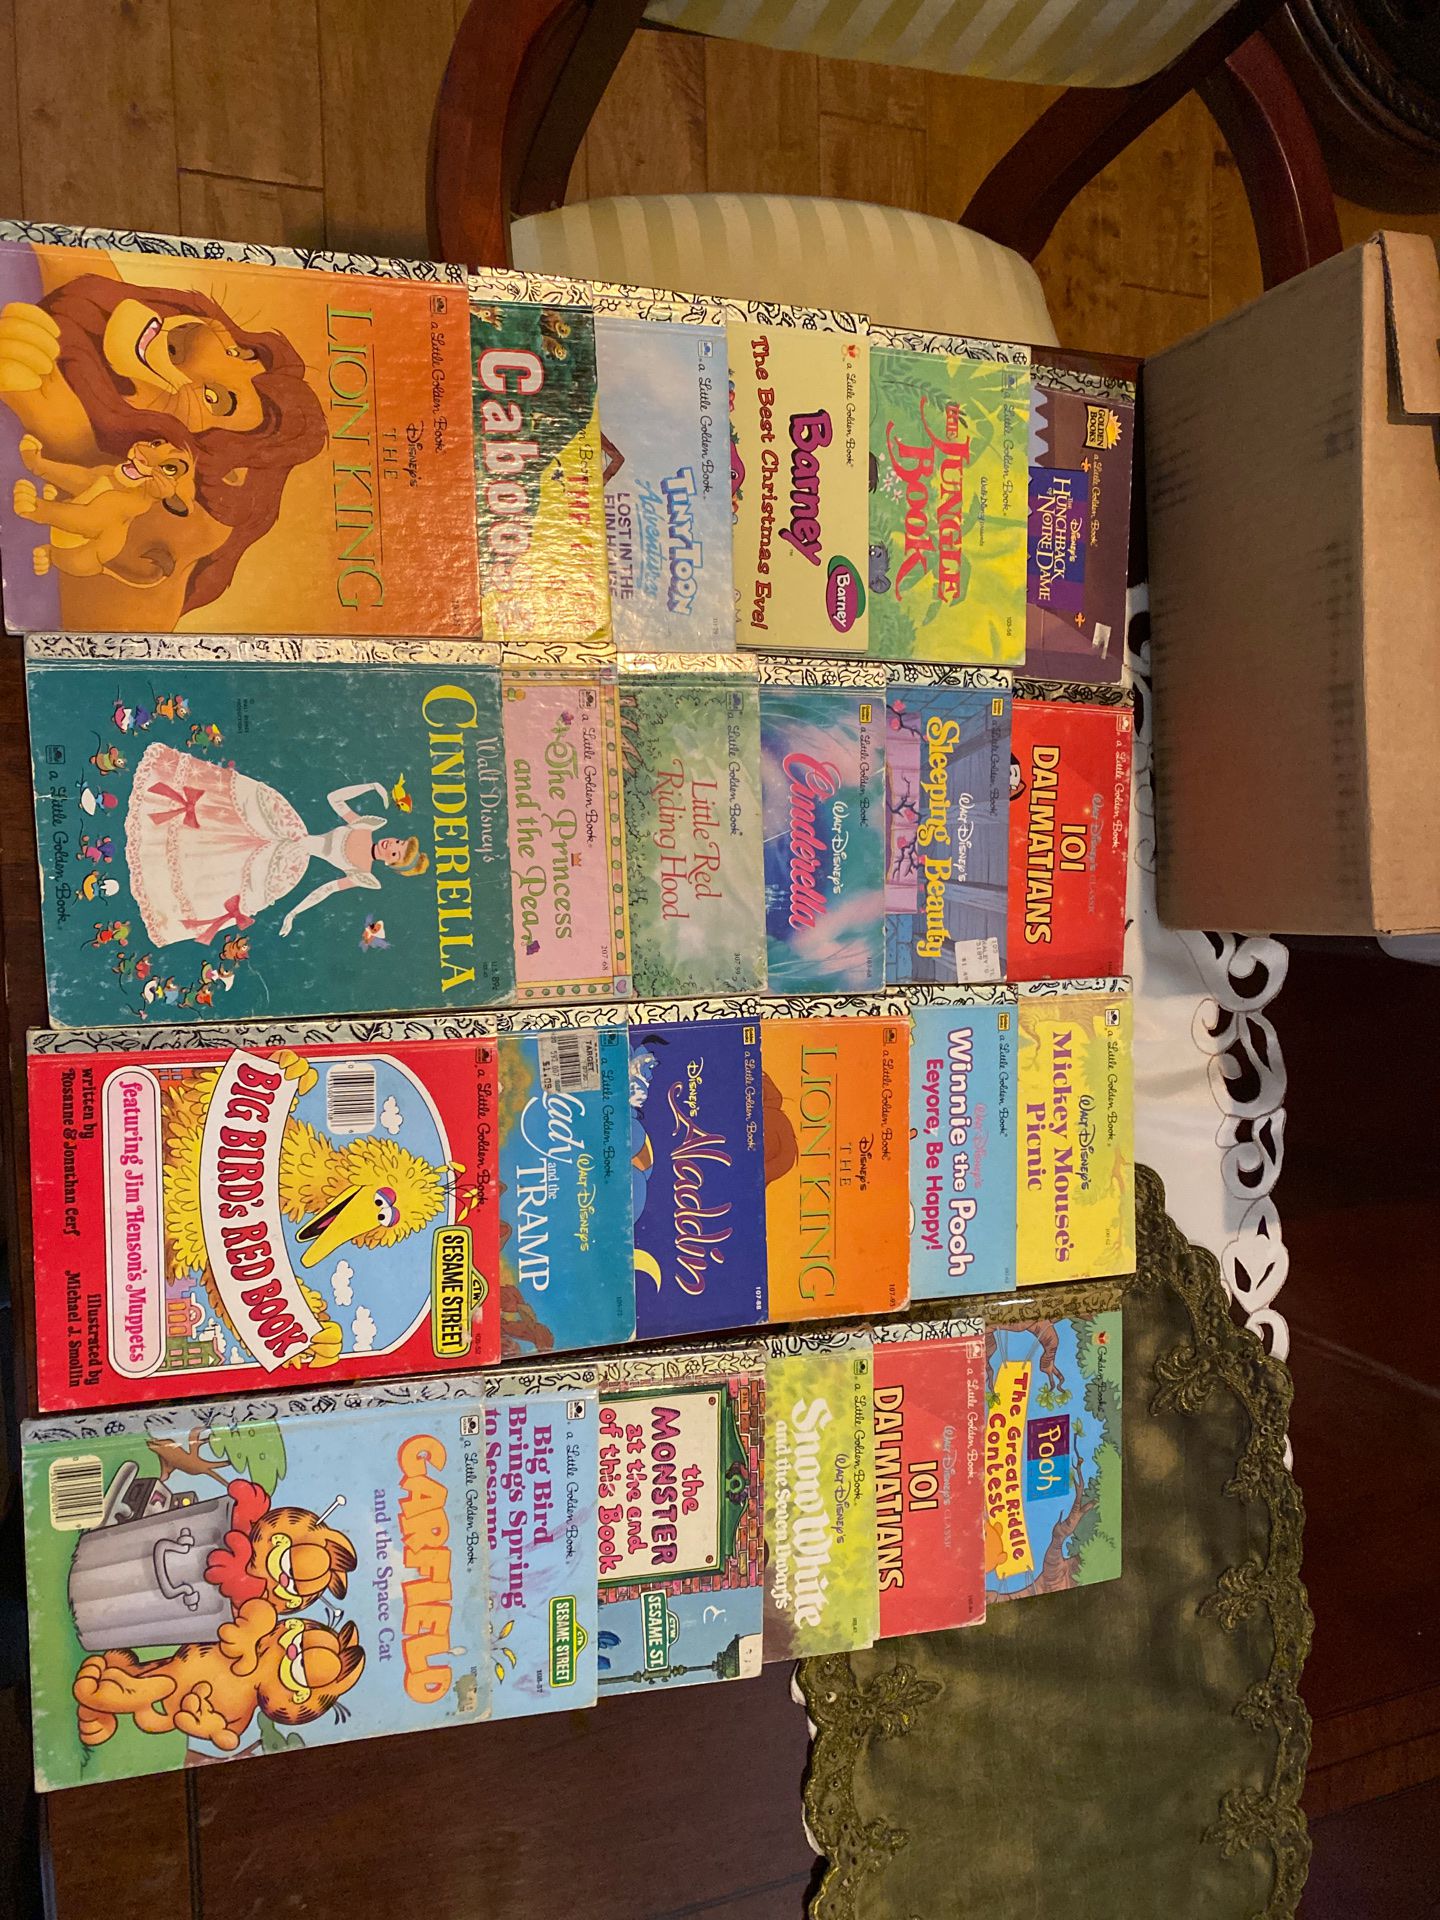 Over 24 children’s books